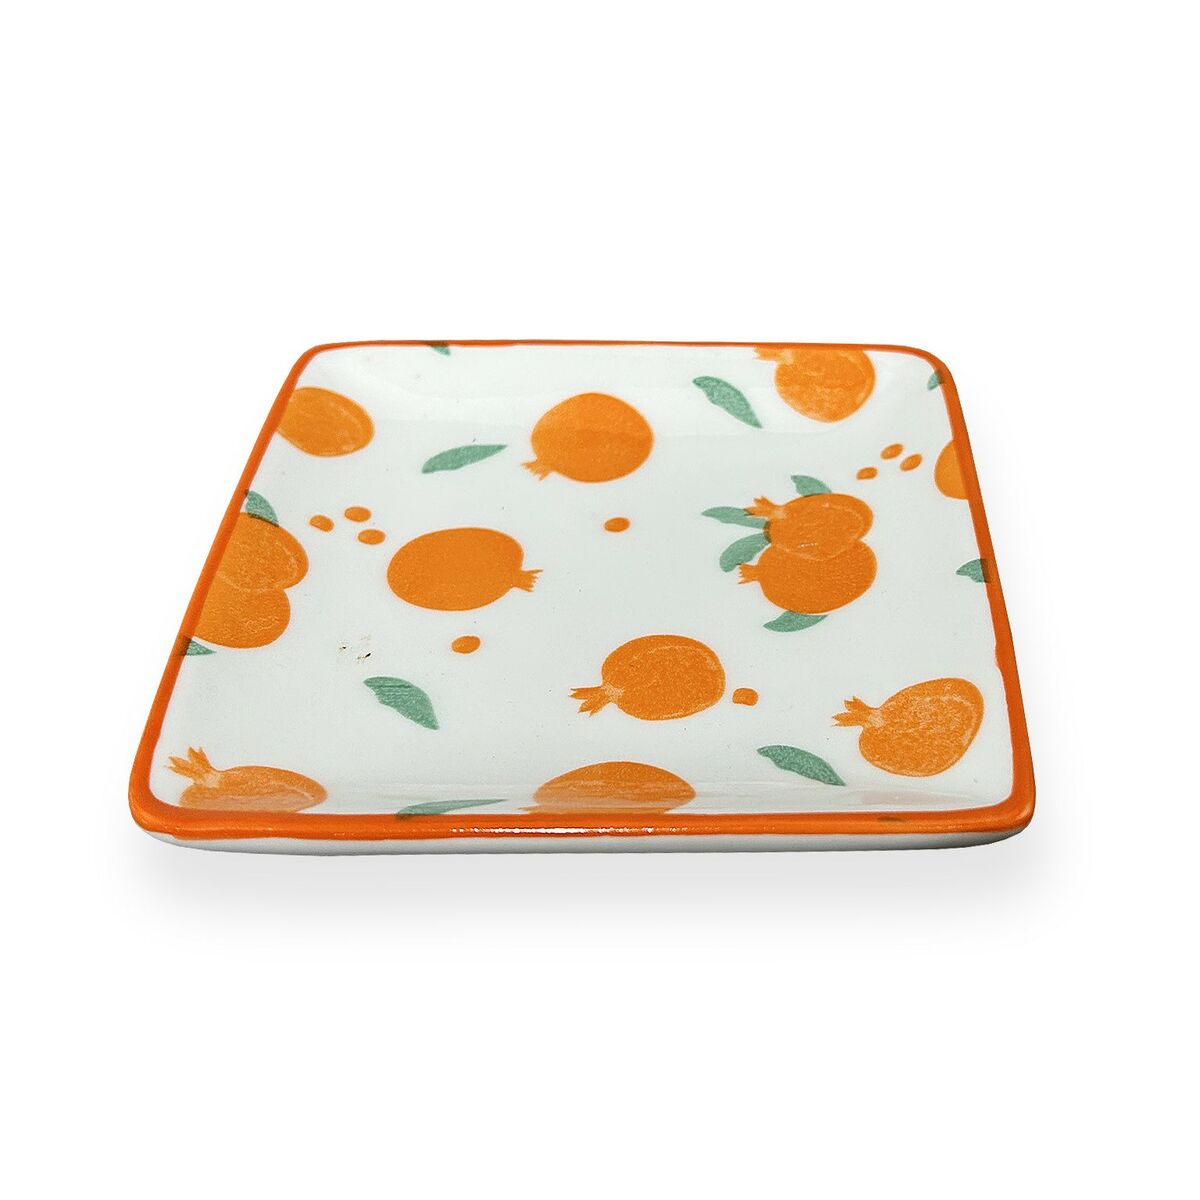 Serving Platter Versa Orange Ceramic Porcelain Squared 11,3 x 1,9 x 11,3 cm